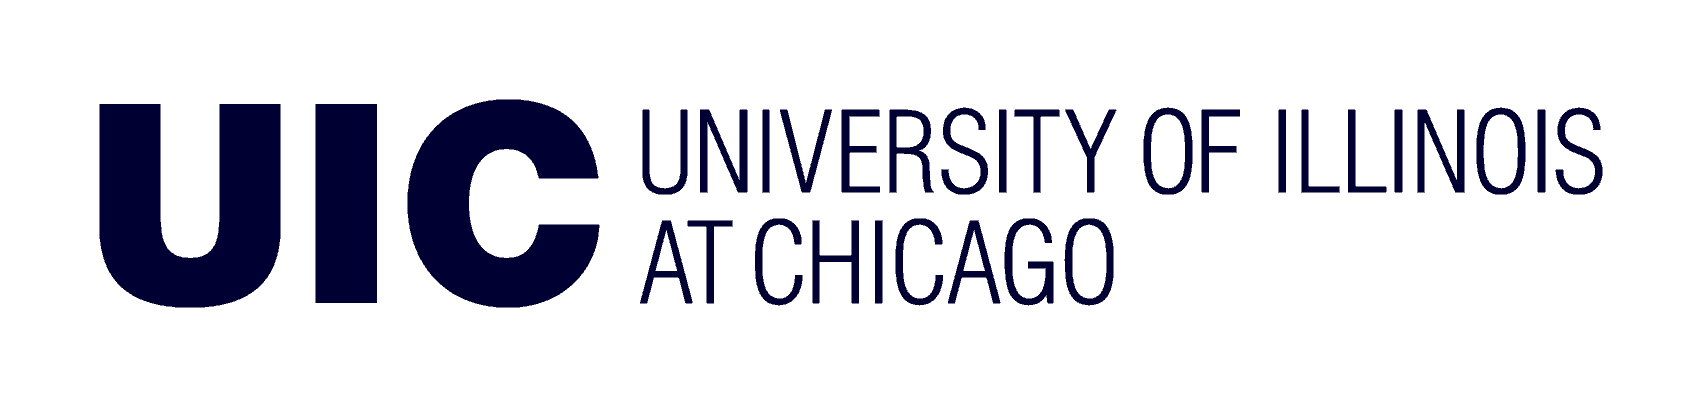 Logo for University of Illinois Chicago Coding Bootcamp